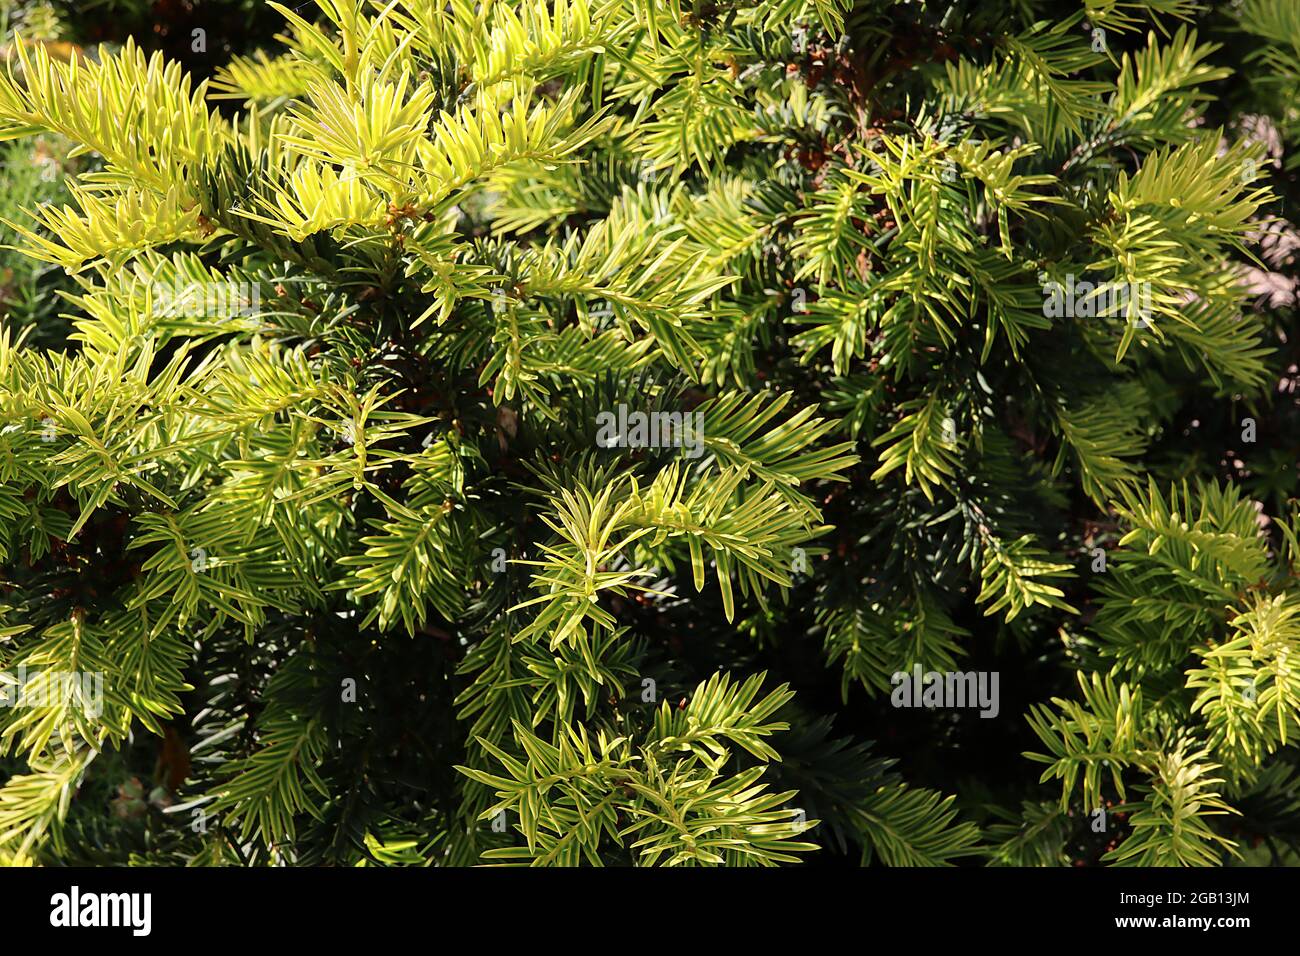 Taxus baccata ‘Fastigiata Aureomarginata’ Irish yew – whorls of very small linear mid green leaves with yellow margins,  June, England, UK Stock Photo